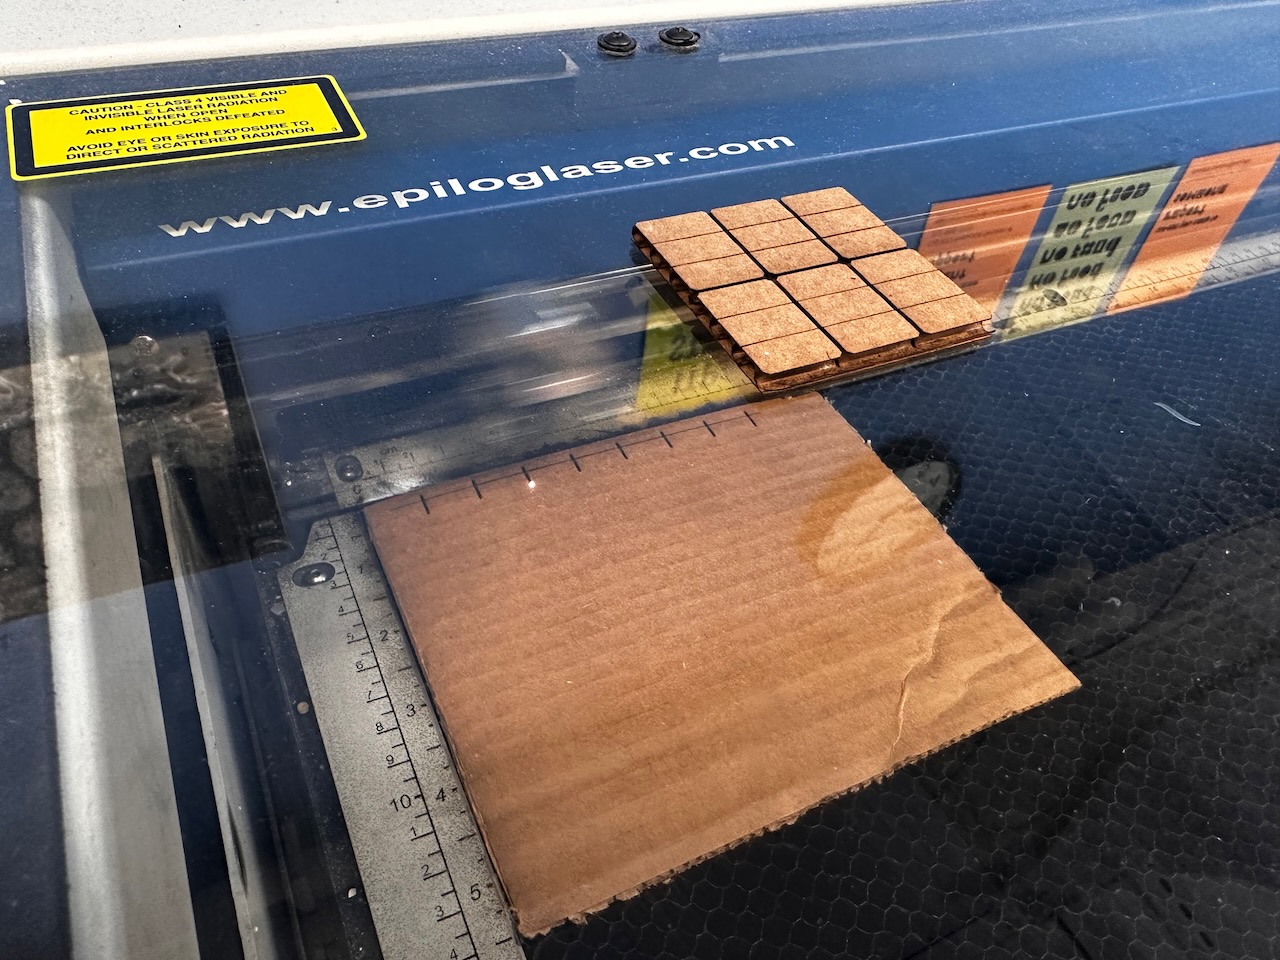 Laser cutter engraving cardboard